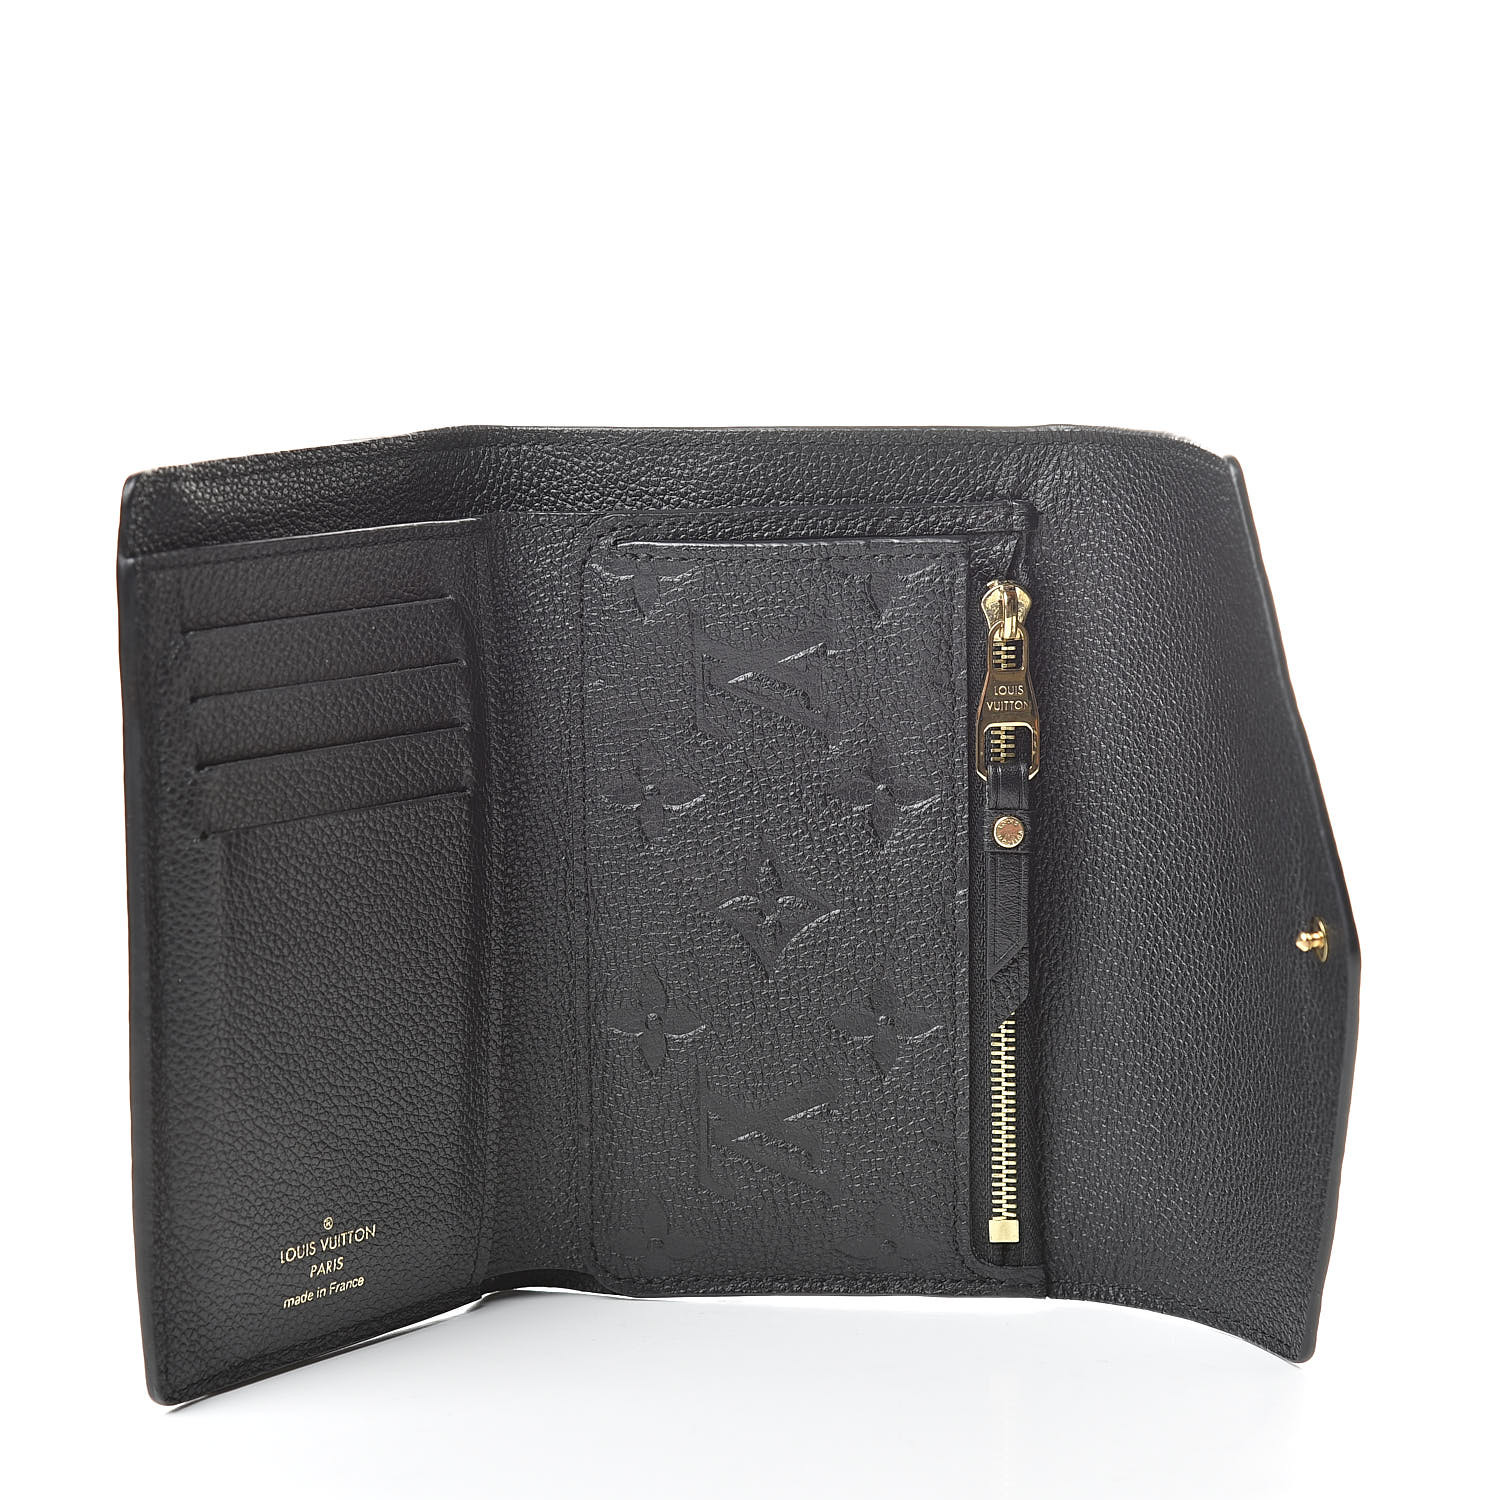 LOUIS VUITTON Empreinte Compact Curieuse Wallet Black 514114